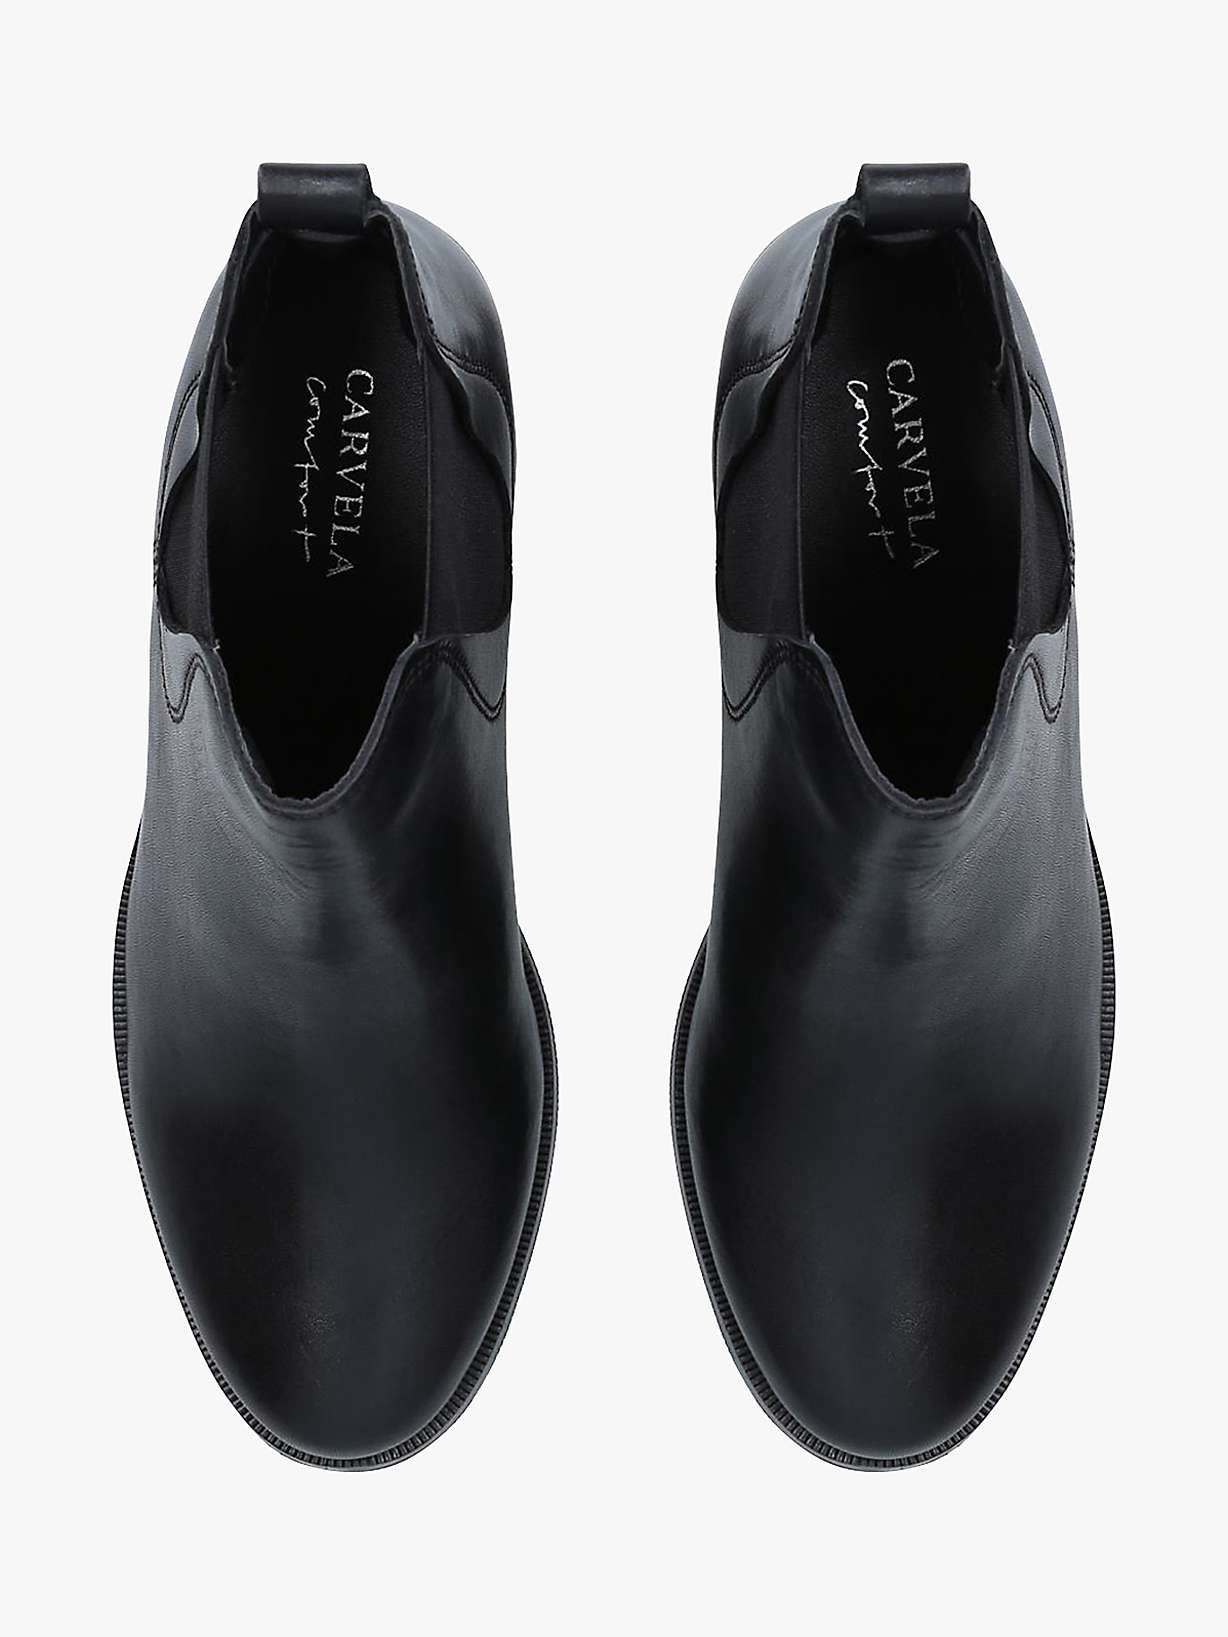 Buy Carvela Comfort Ronald Block Heel Leather Ankle Boots Online at johnlewis.com